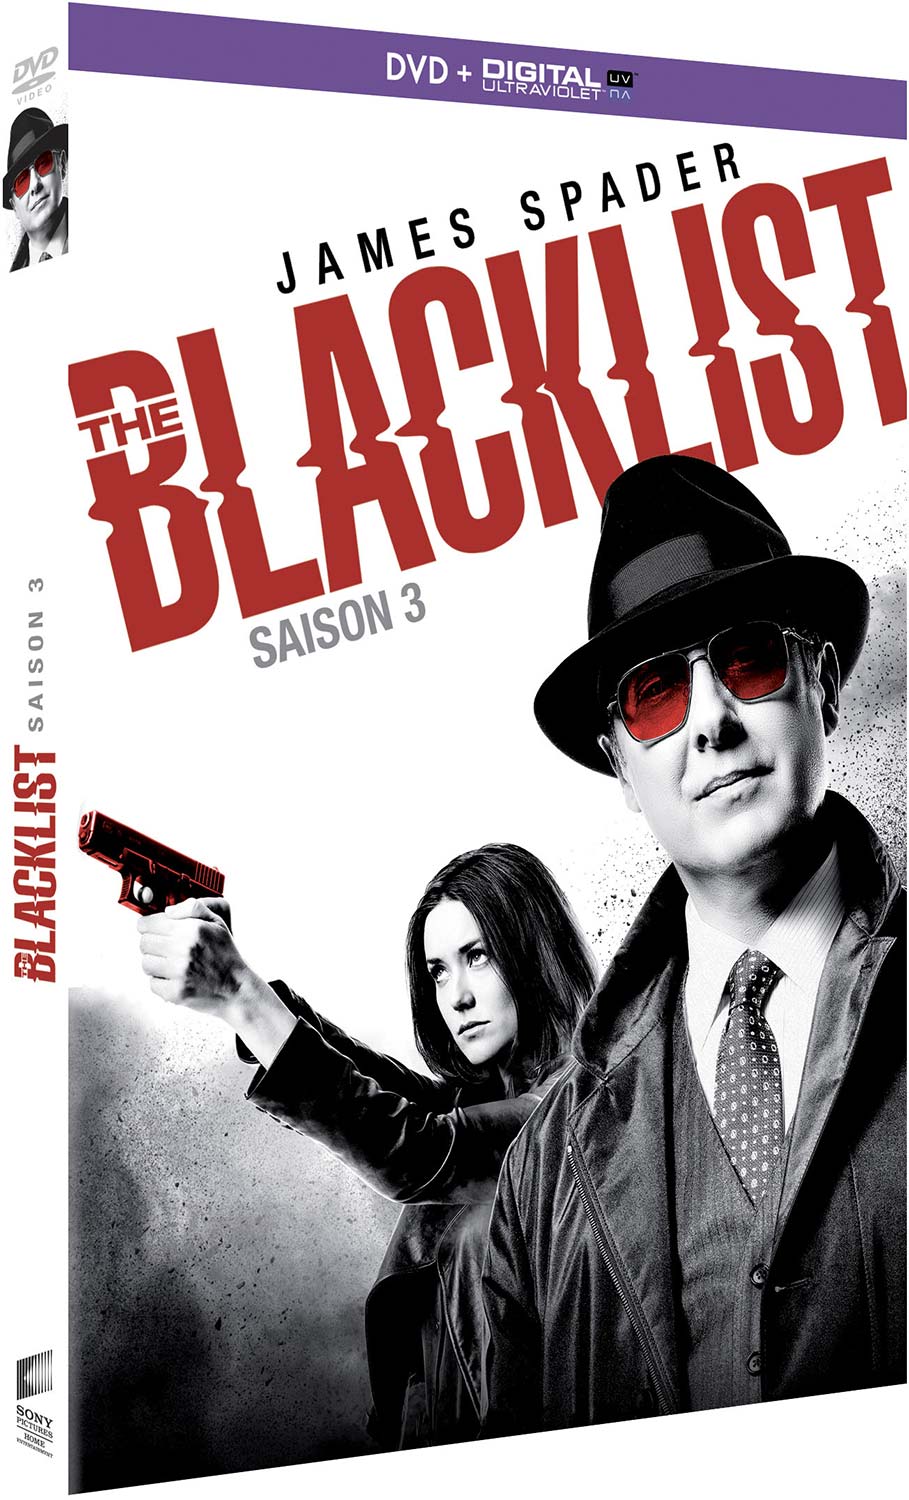 THE BLACKLIST - SAISON 3 - 6 DVD